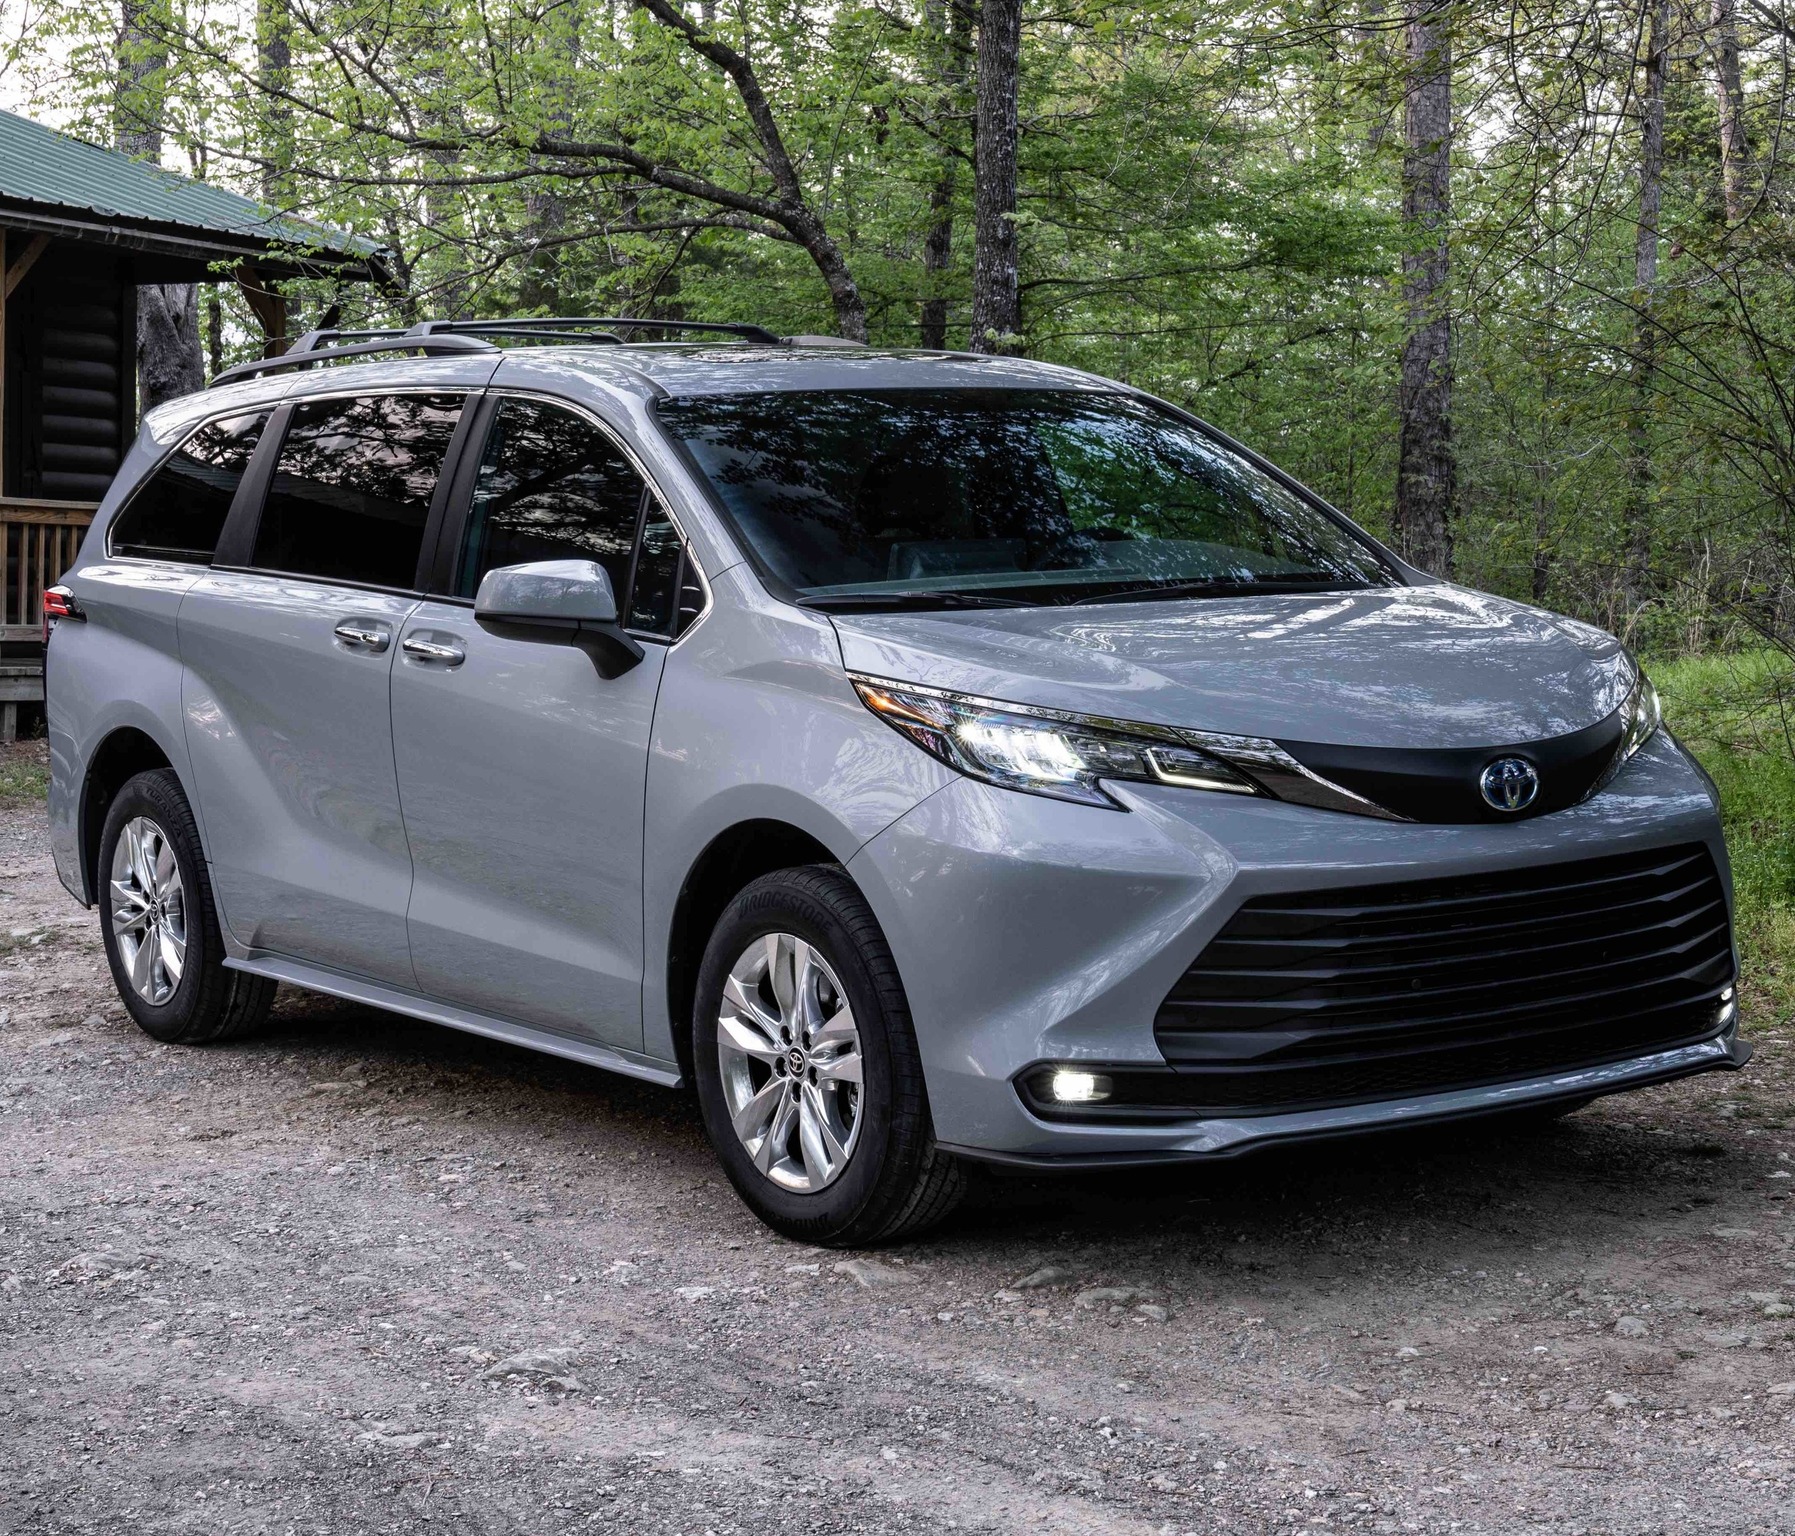 2022 Toyota Sienna Woodland: Minivan transformed into an SUV